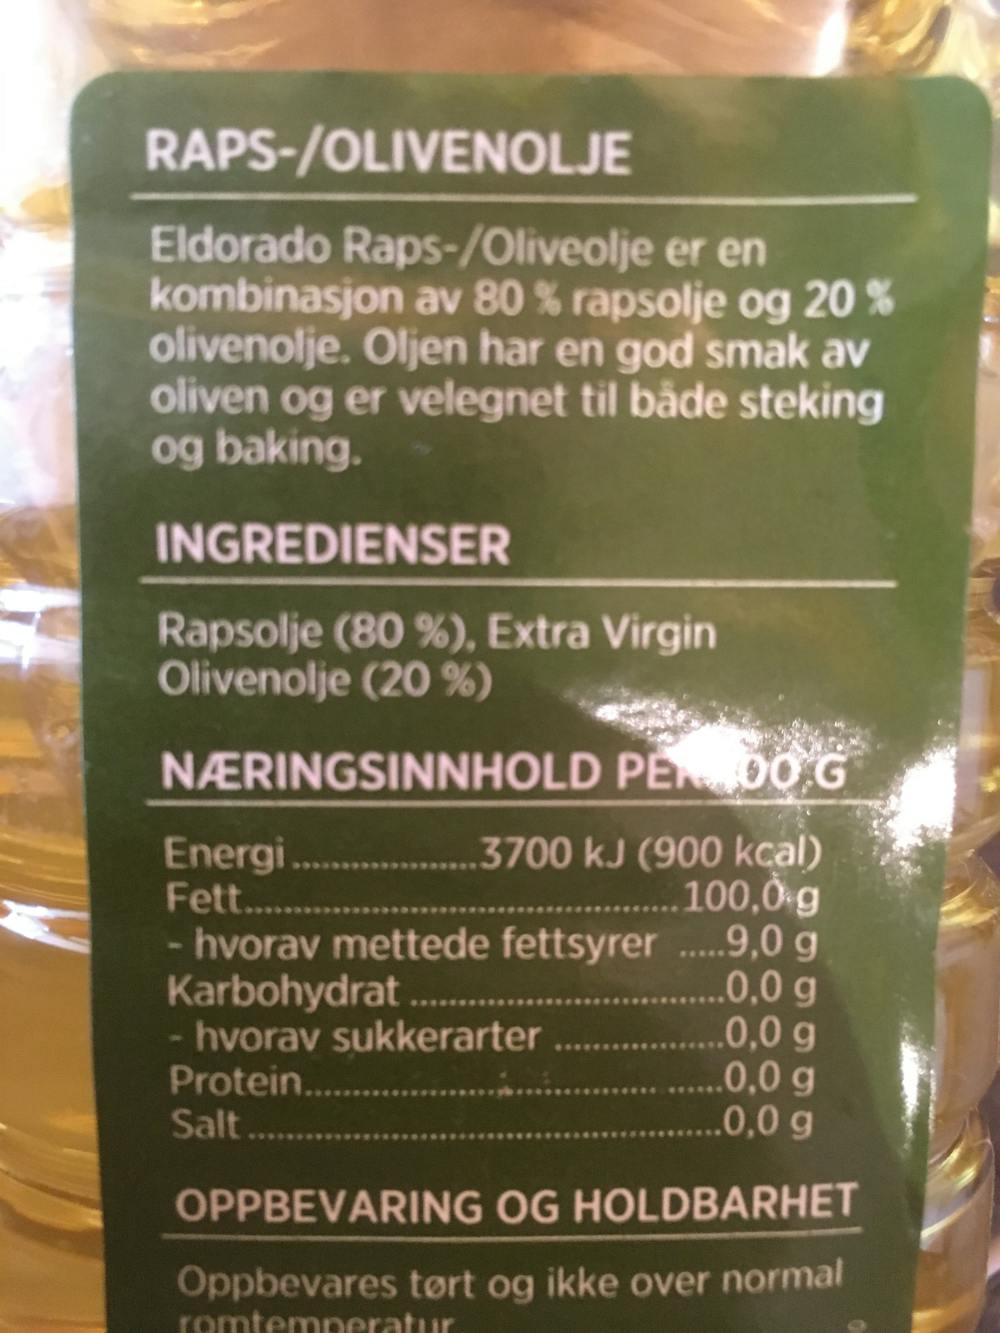 Ingredienslisten til Raps-/olivenolje, Eldorado